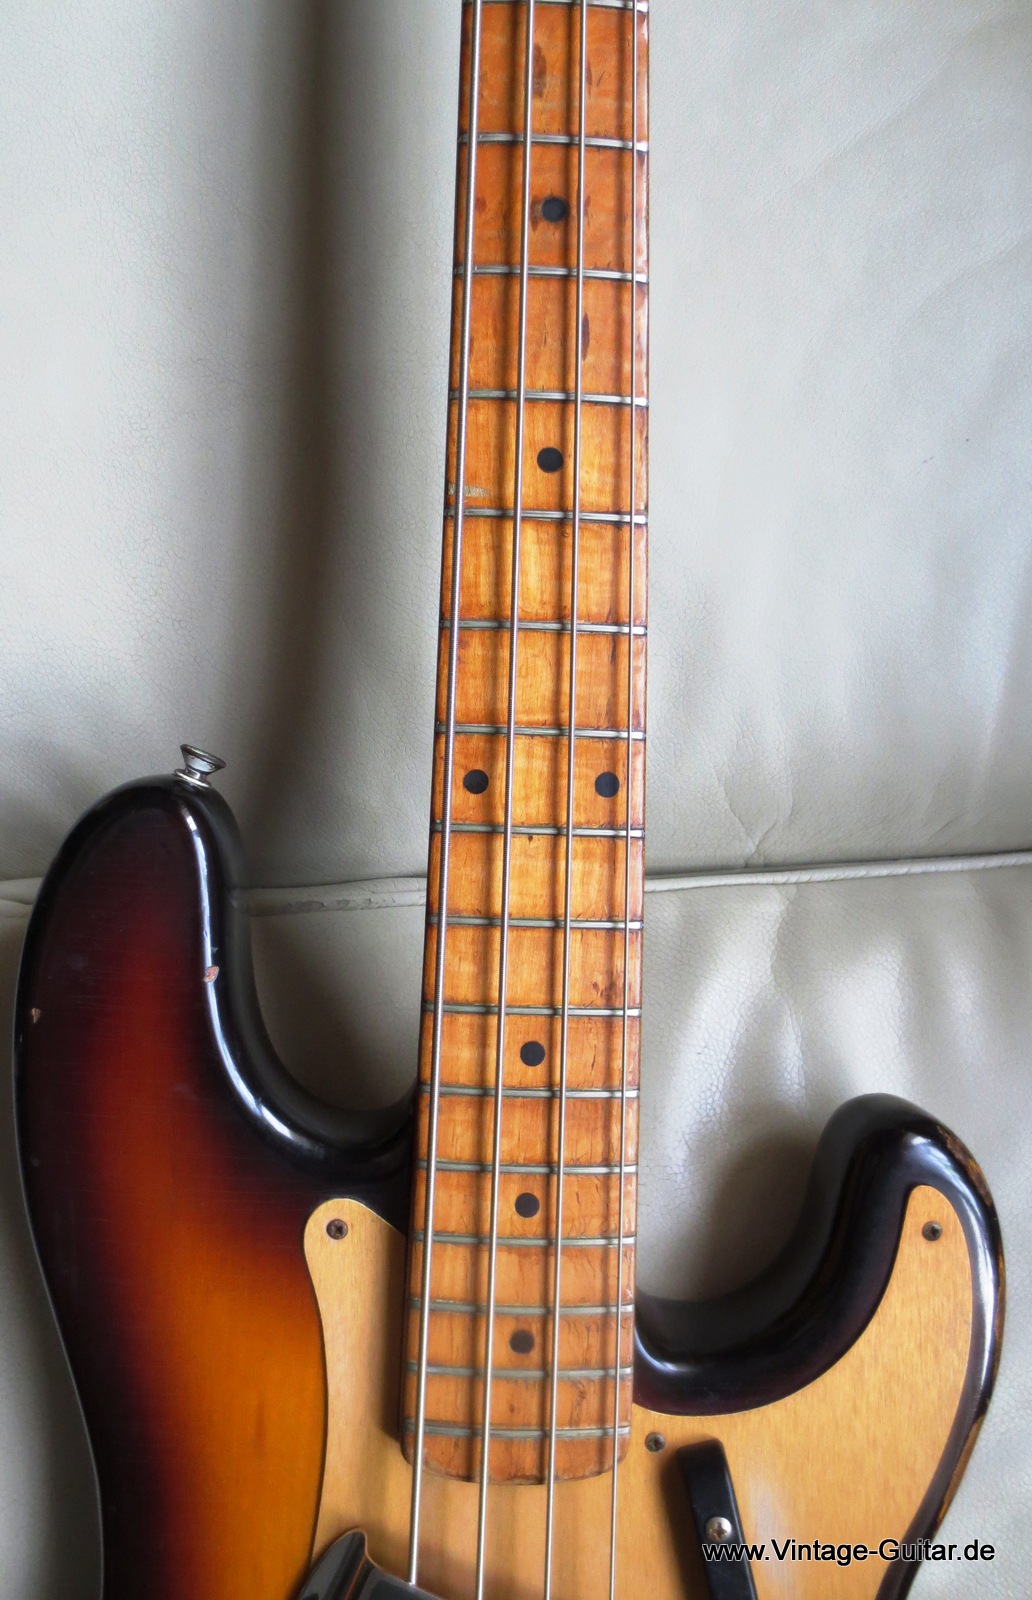 Fender_Precision_Bass_1958-anodized-pickguard-003.JPG